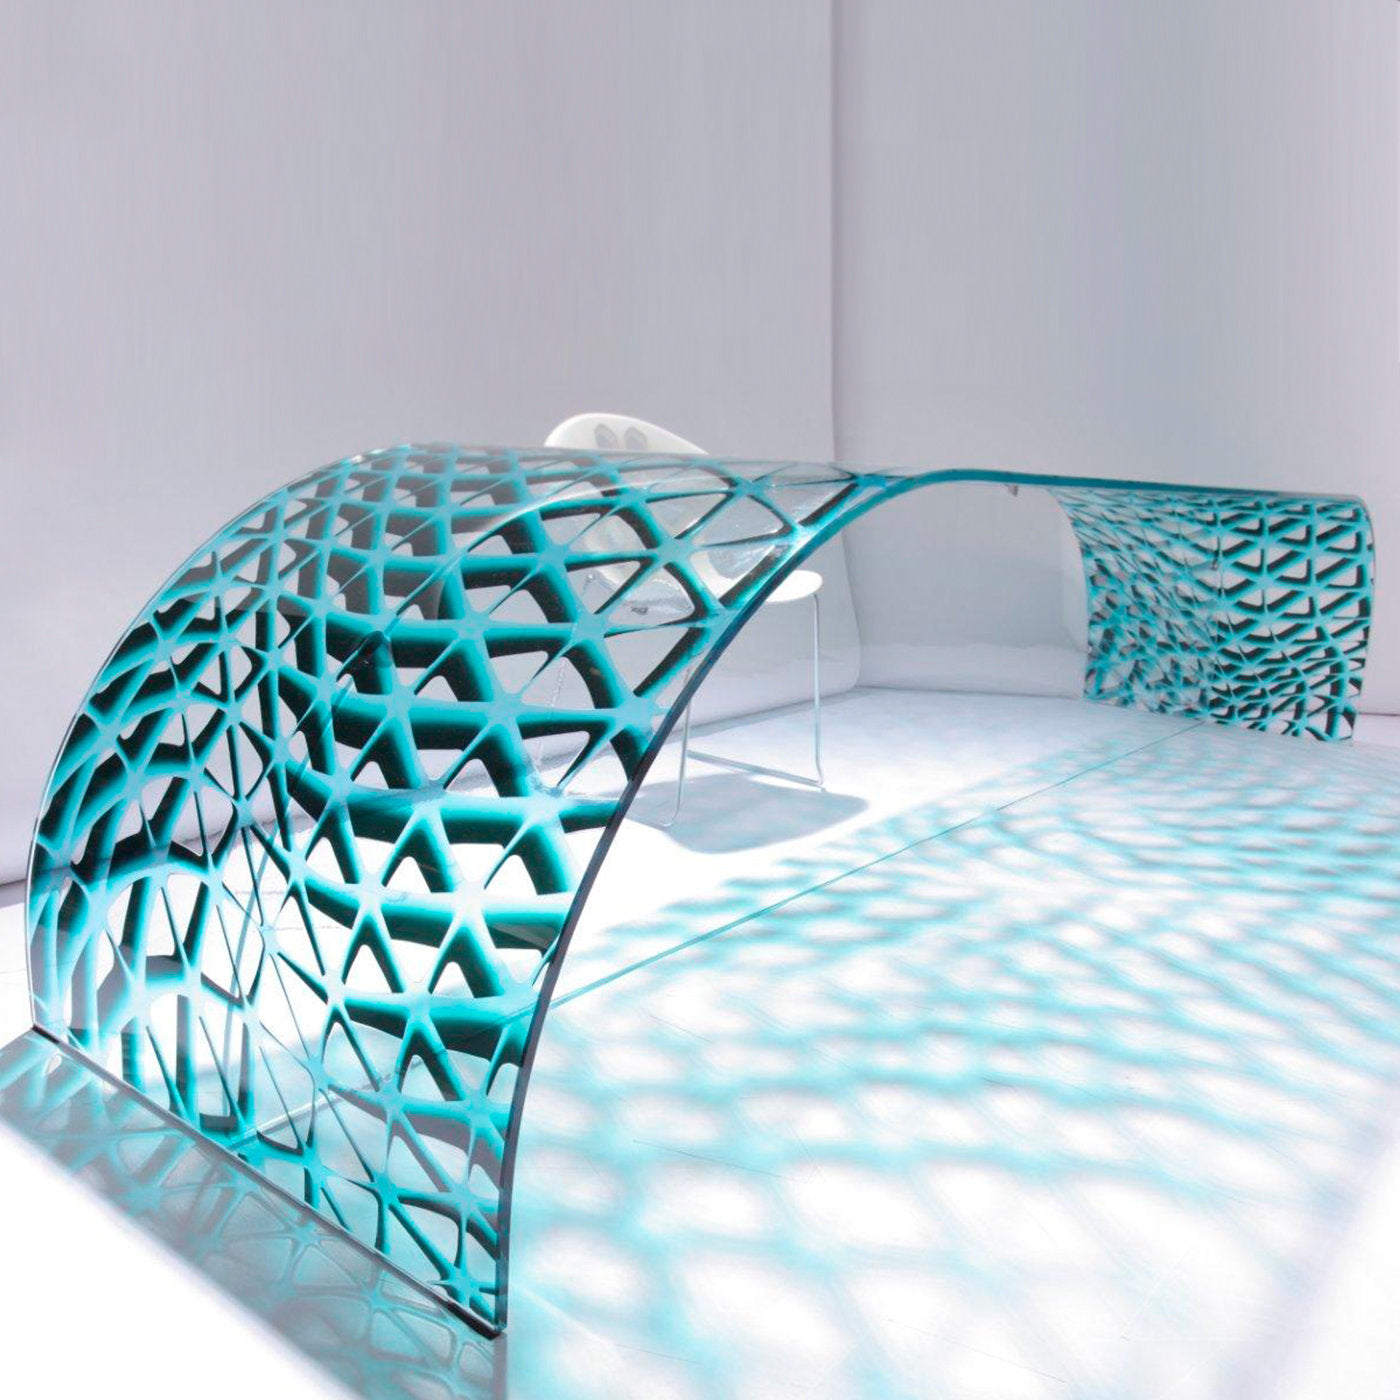 Nastro 3D Glass Table by Daniele Merini and Mac Stopà - Alternative view 4